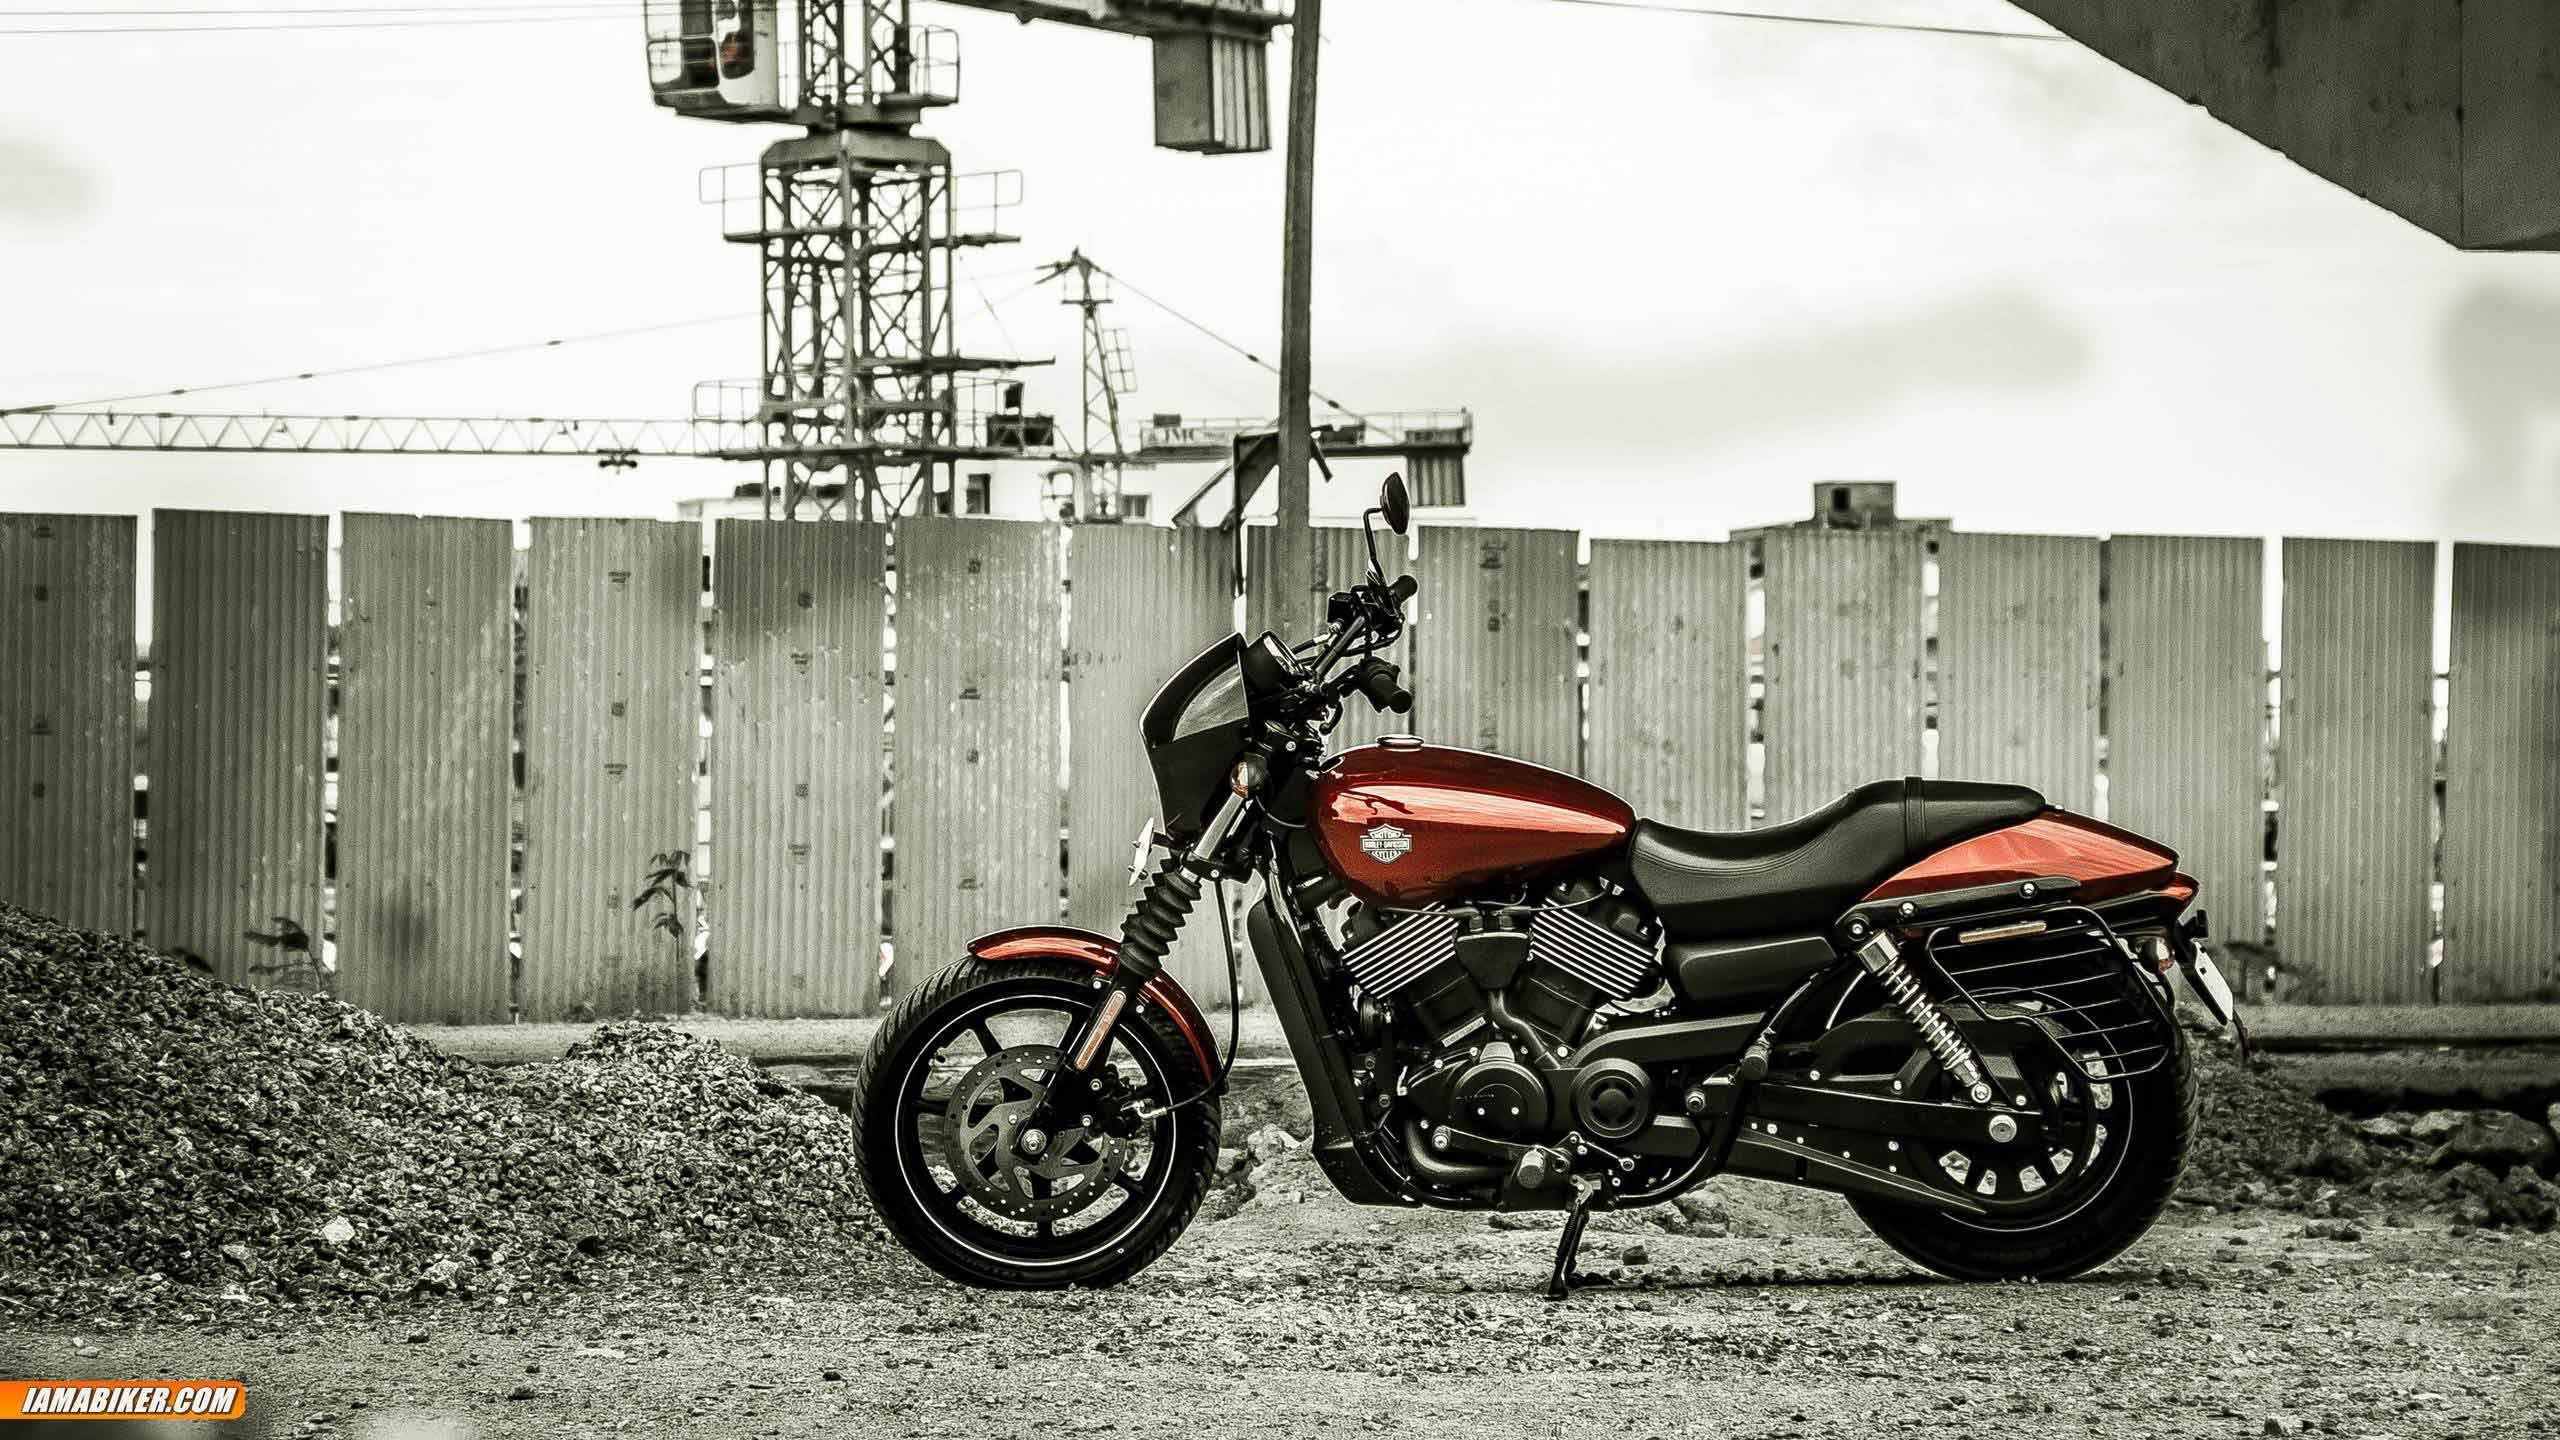 2560x1440 Harley Davidson Street 750 HD wallpapers